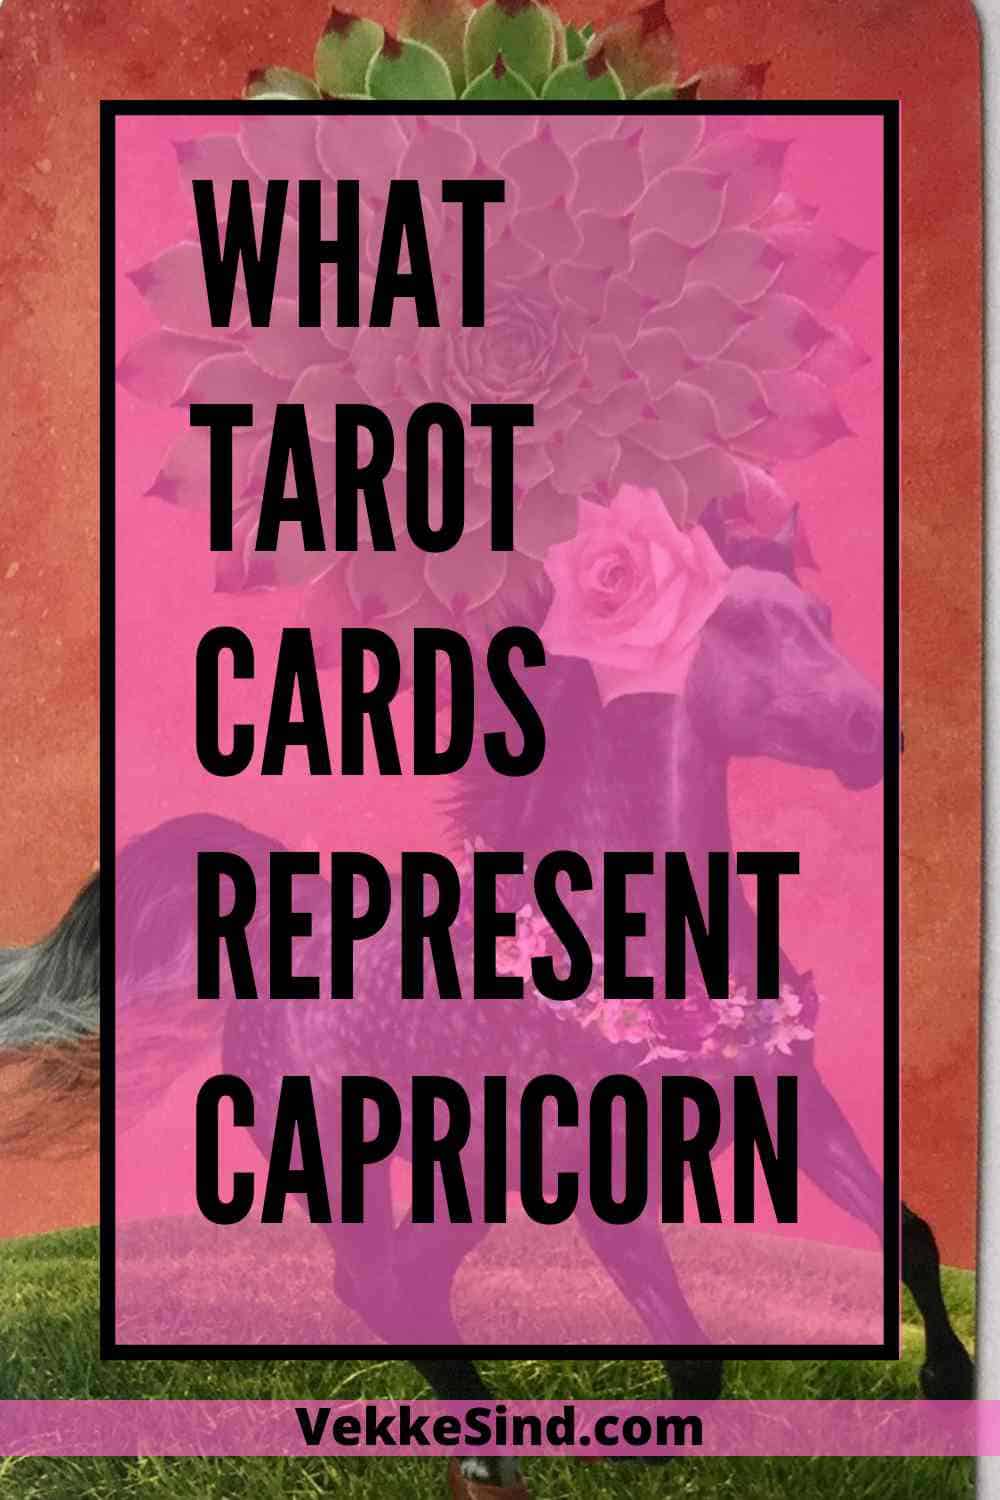 What Tarot Cards Represent Capricorn? Vekke Sind